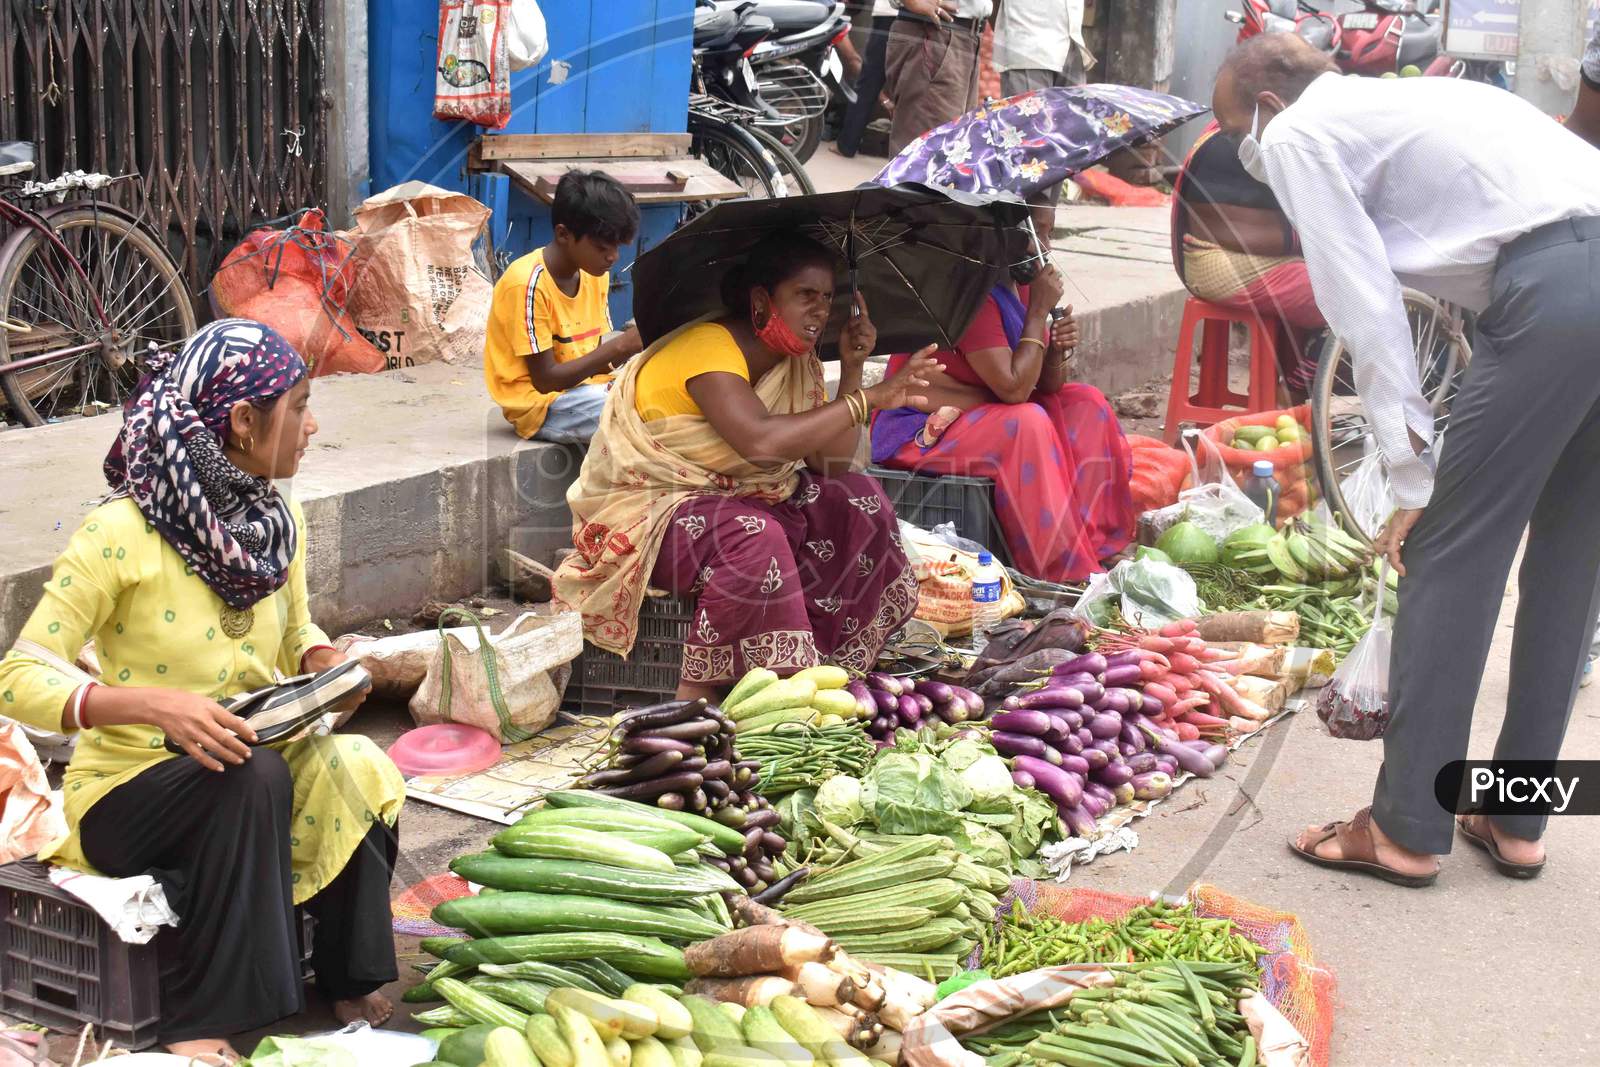 Vendors selling vegetables